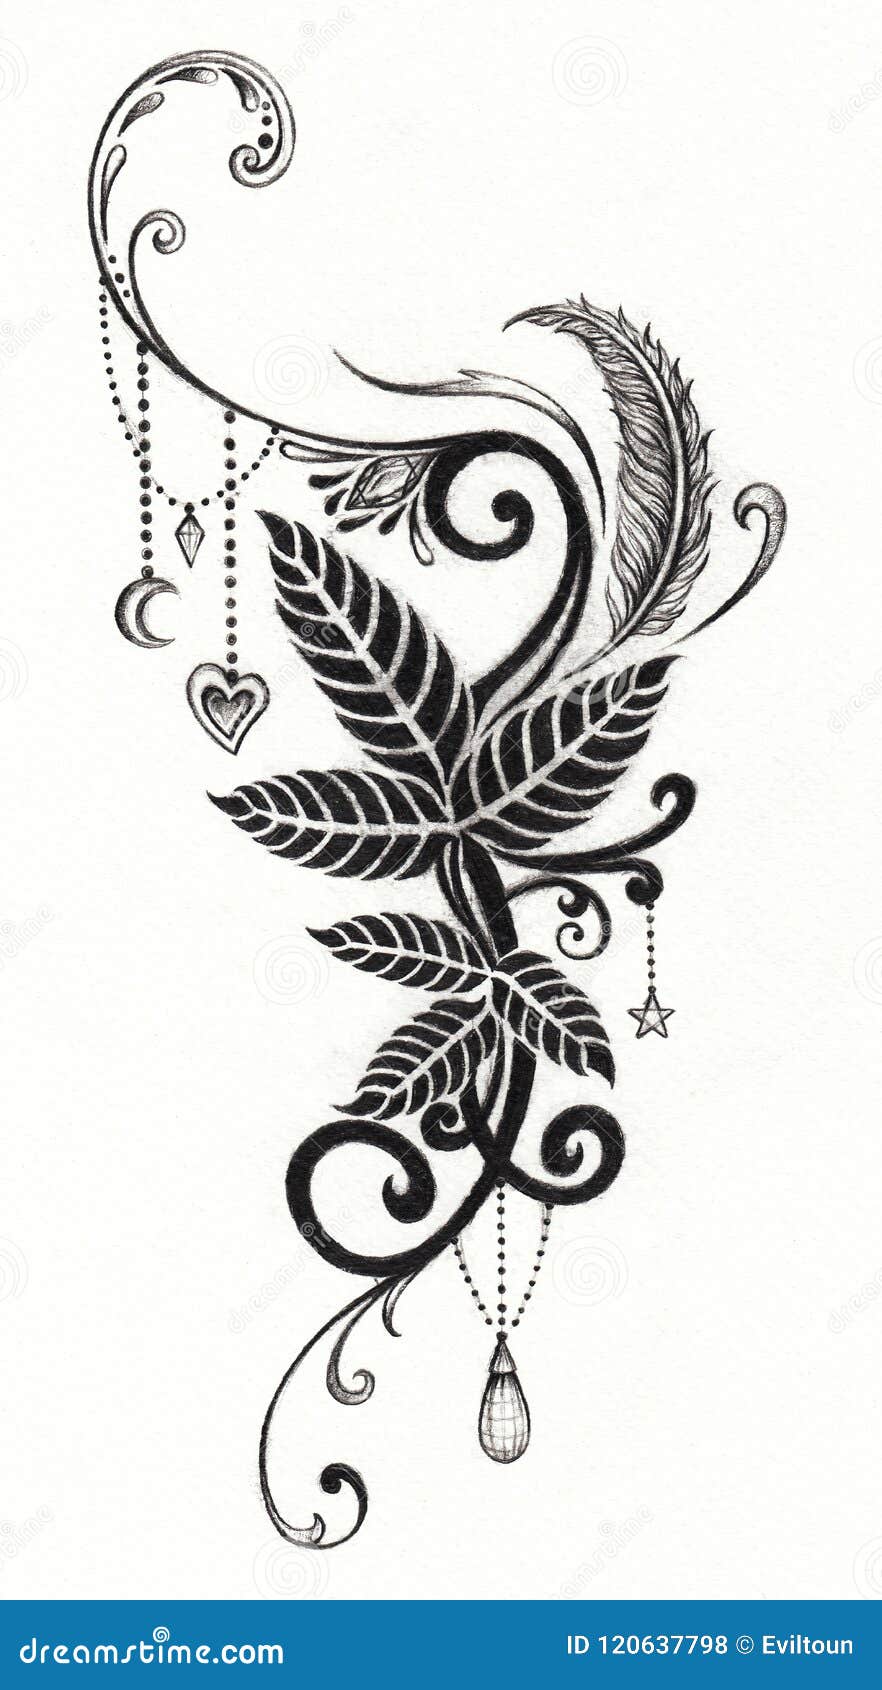 Tiny Maple leaf Tattoo by Inkbymax on DeviantArt